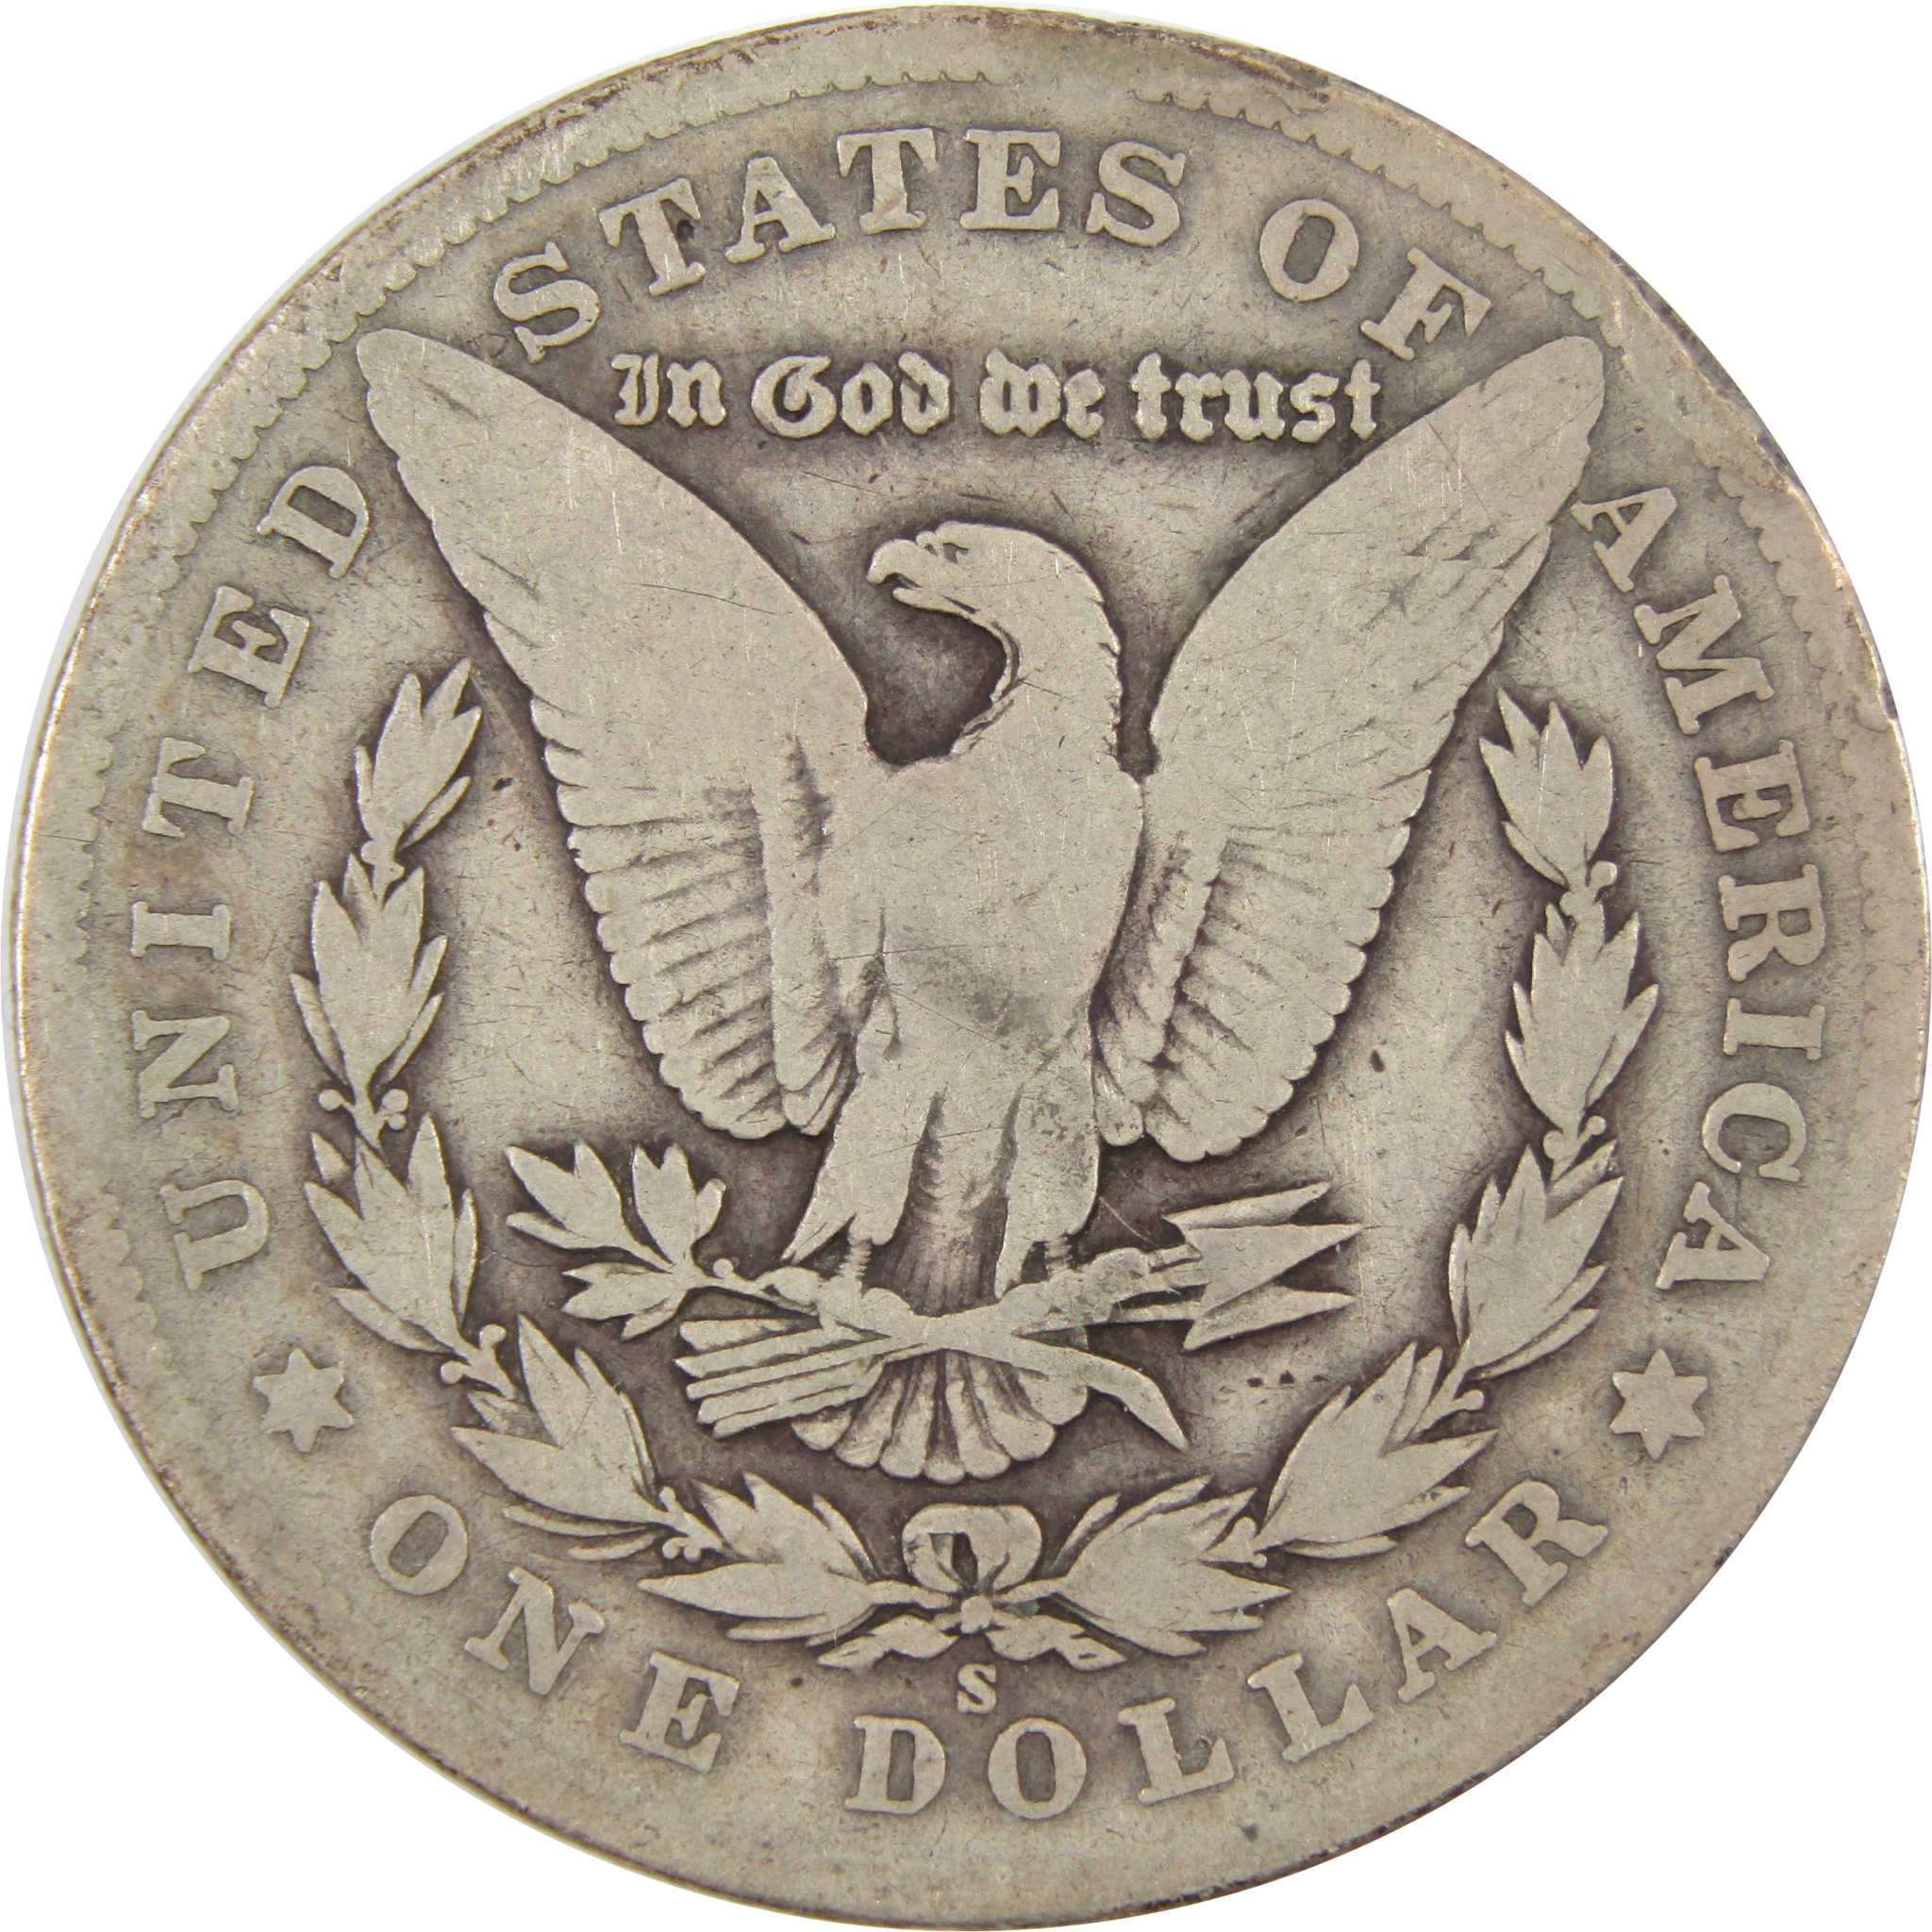 1903 S Morgan Dollar VG Very Good 90% Silver $1 Coin SKU:I7701 - Morgan coin - Morgan silver dollar - Morgan silver dollar for sale - Profile Coins &amp; Collectibles